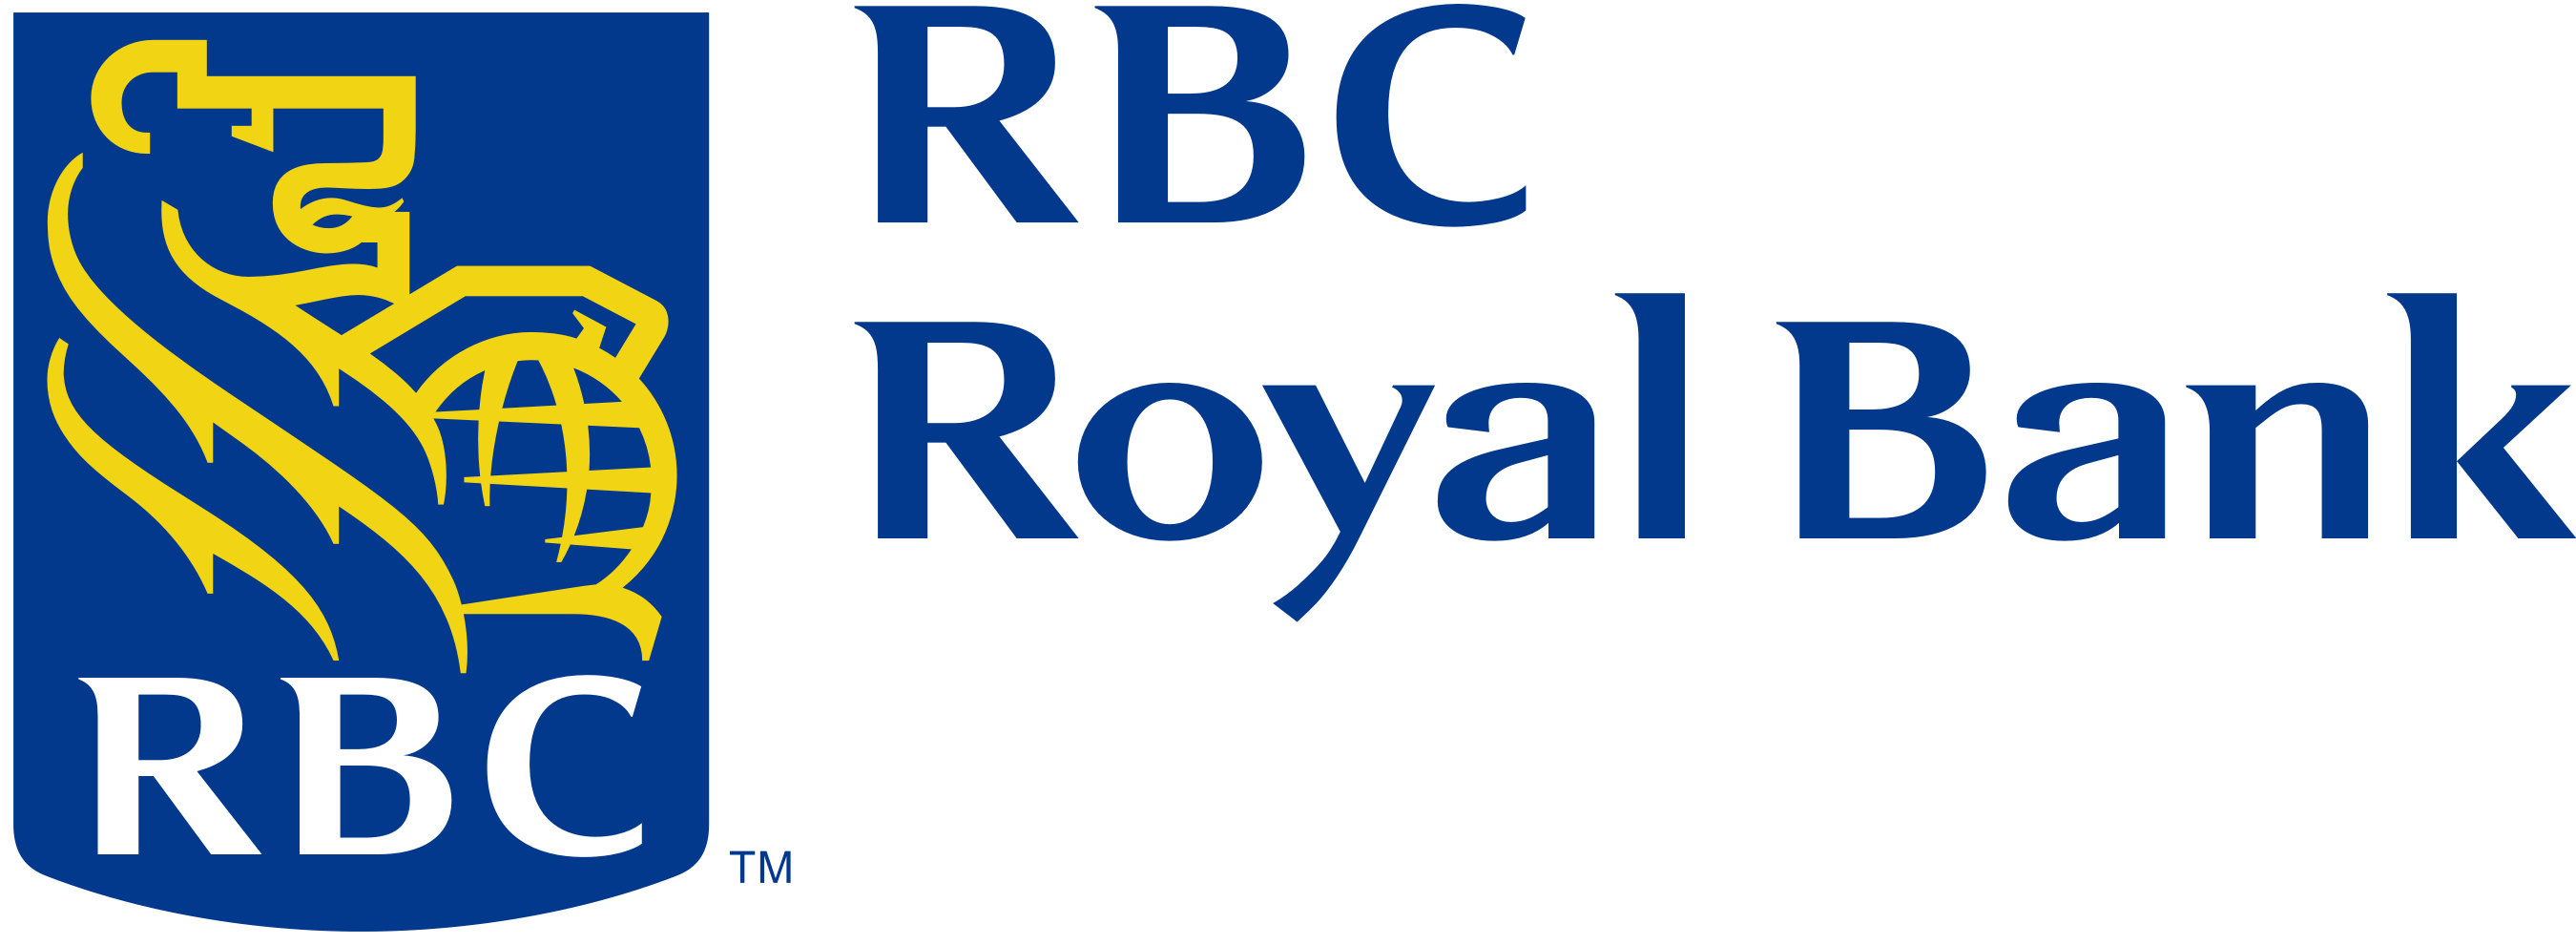 RBC Royal Bank (Cayman) Limited 